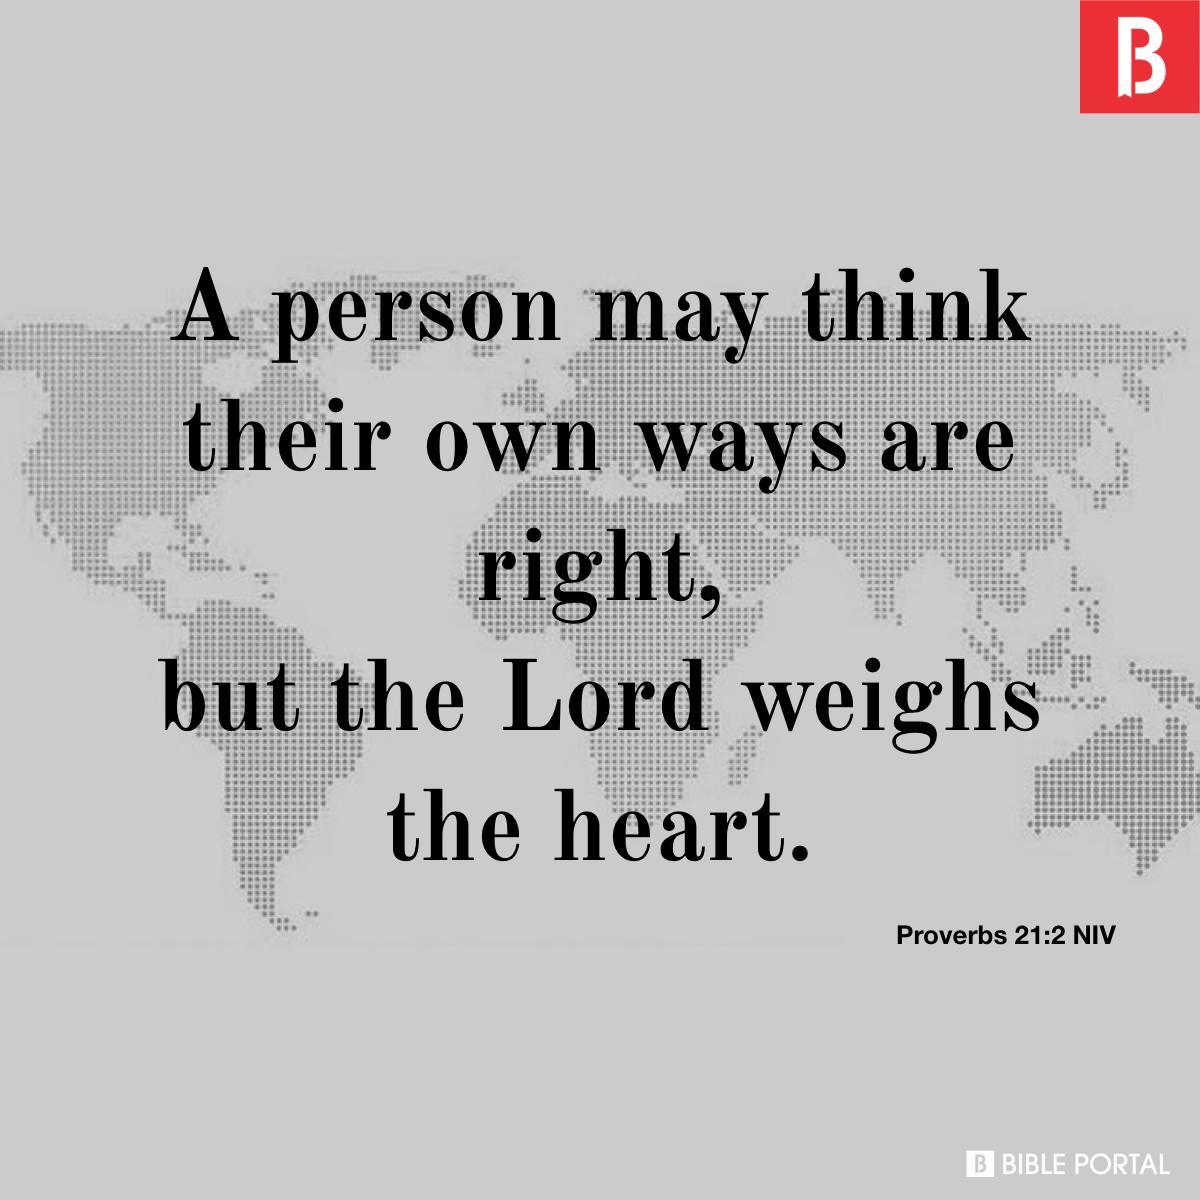 Proverbs 21:2 NIV